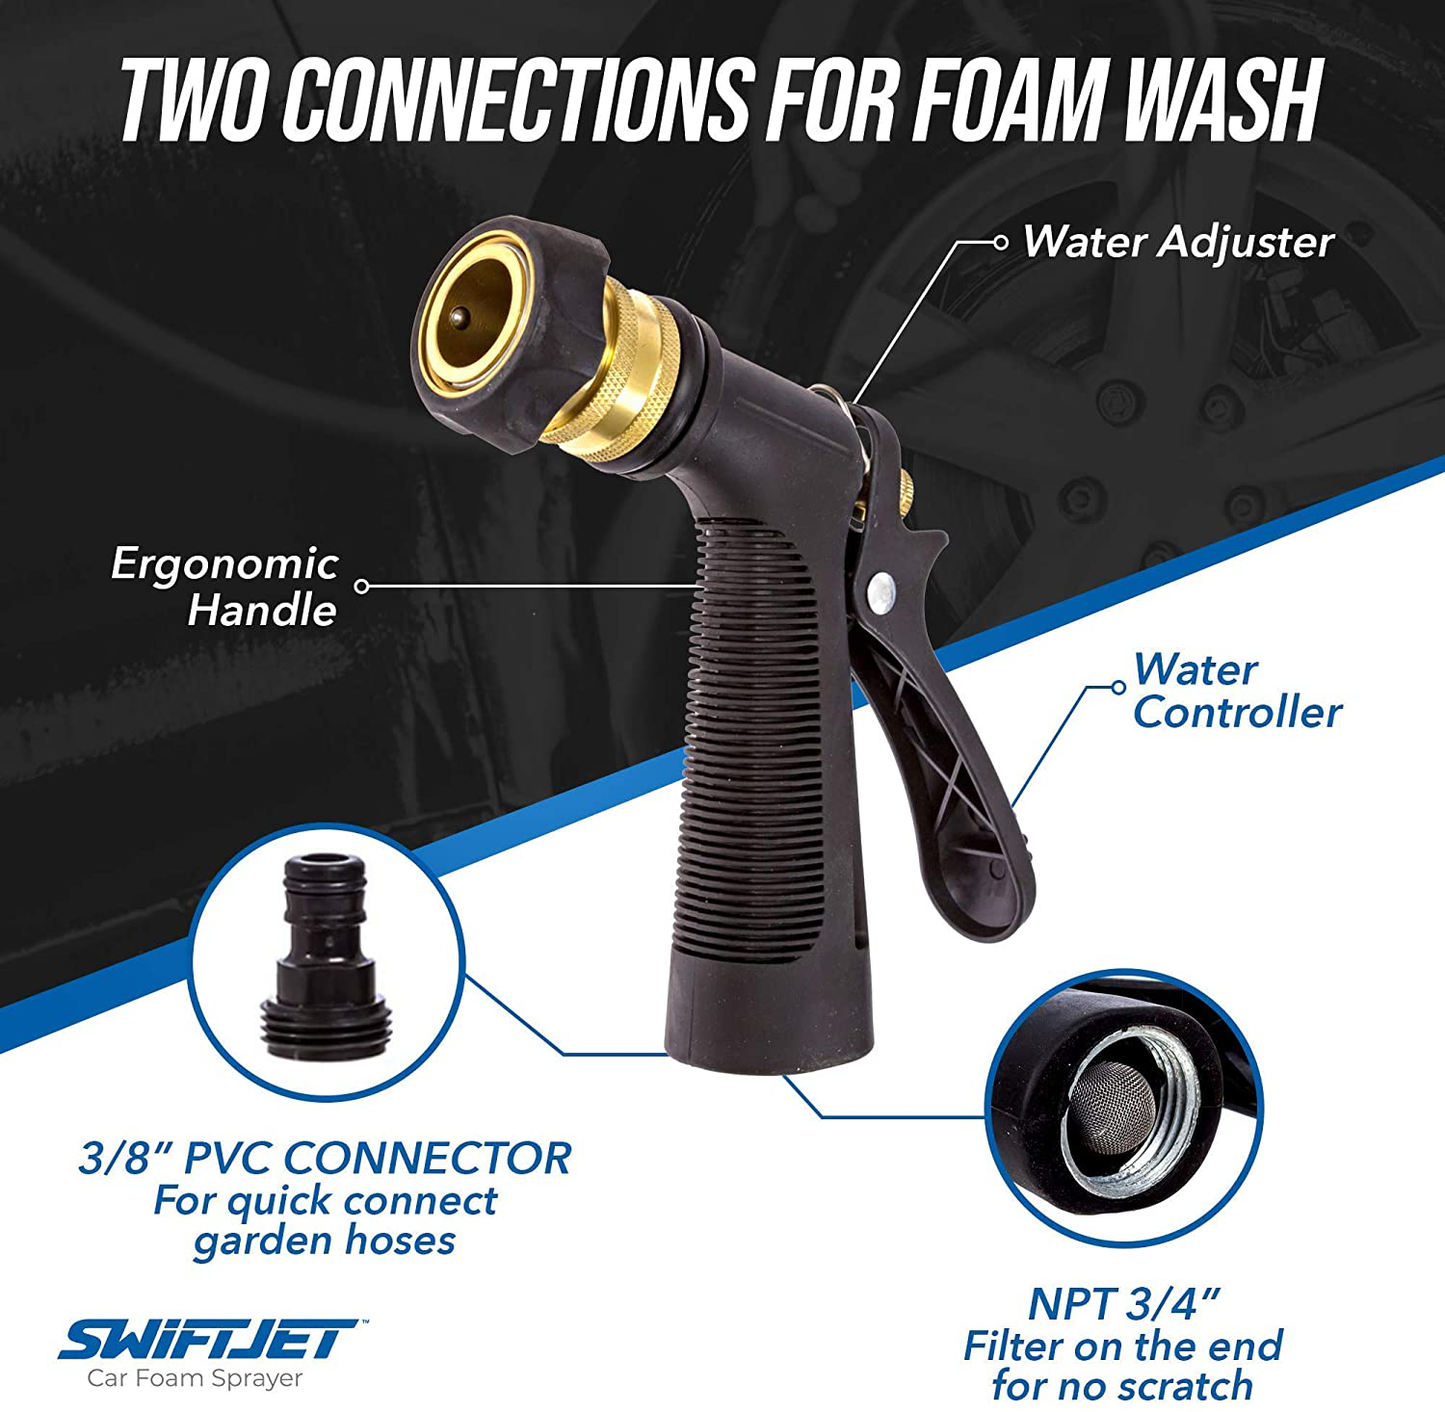 SwiftJet Car Wash Foam Gun Sprayer with Microfiber Wash Mit - Adjustable Water Pressure & Soap Ratio Dial - Foam Cannon Attaches to Any Garden Hose (Foam Sprayer with Wash Mit)